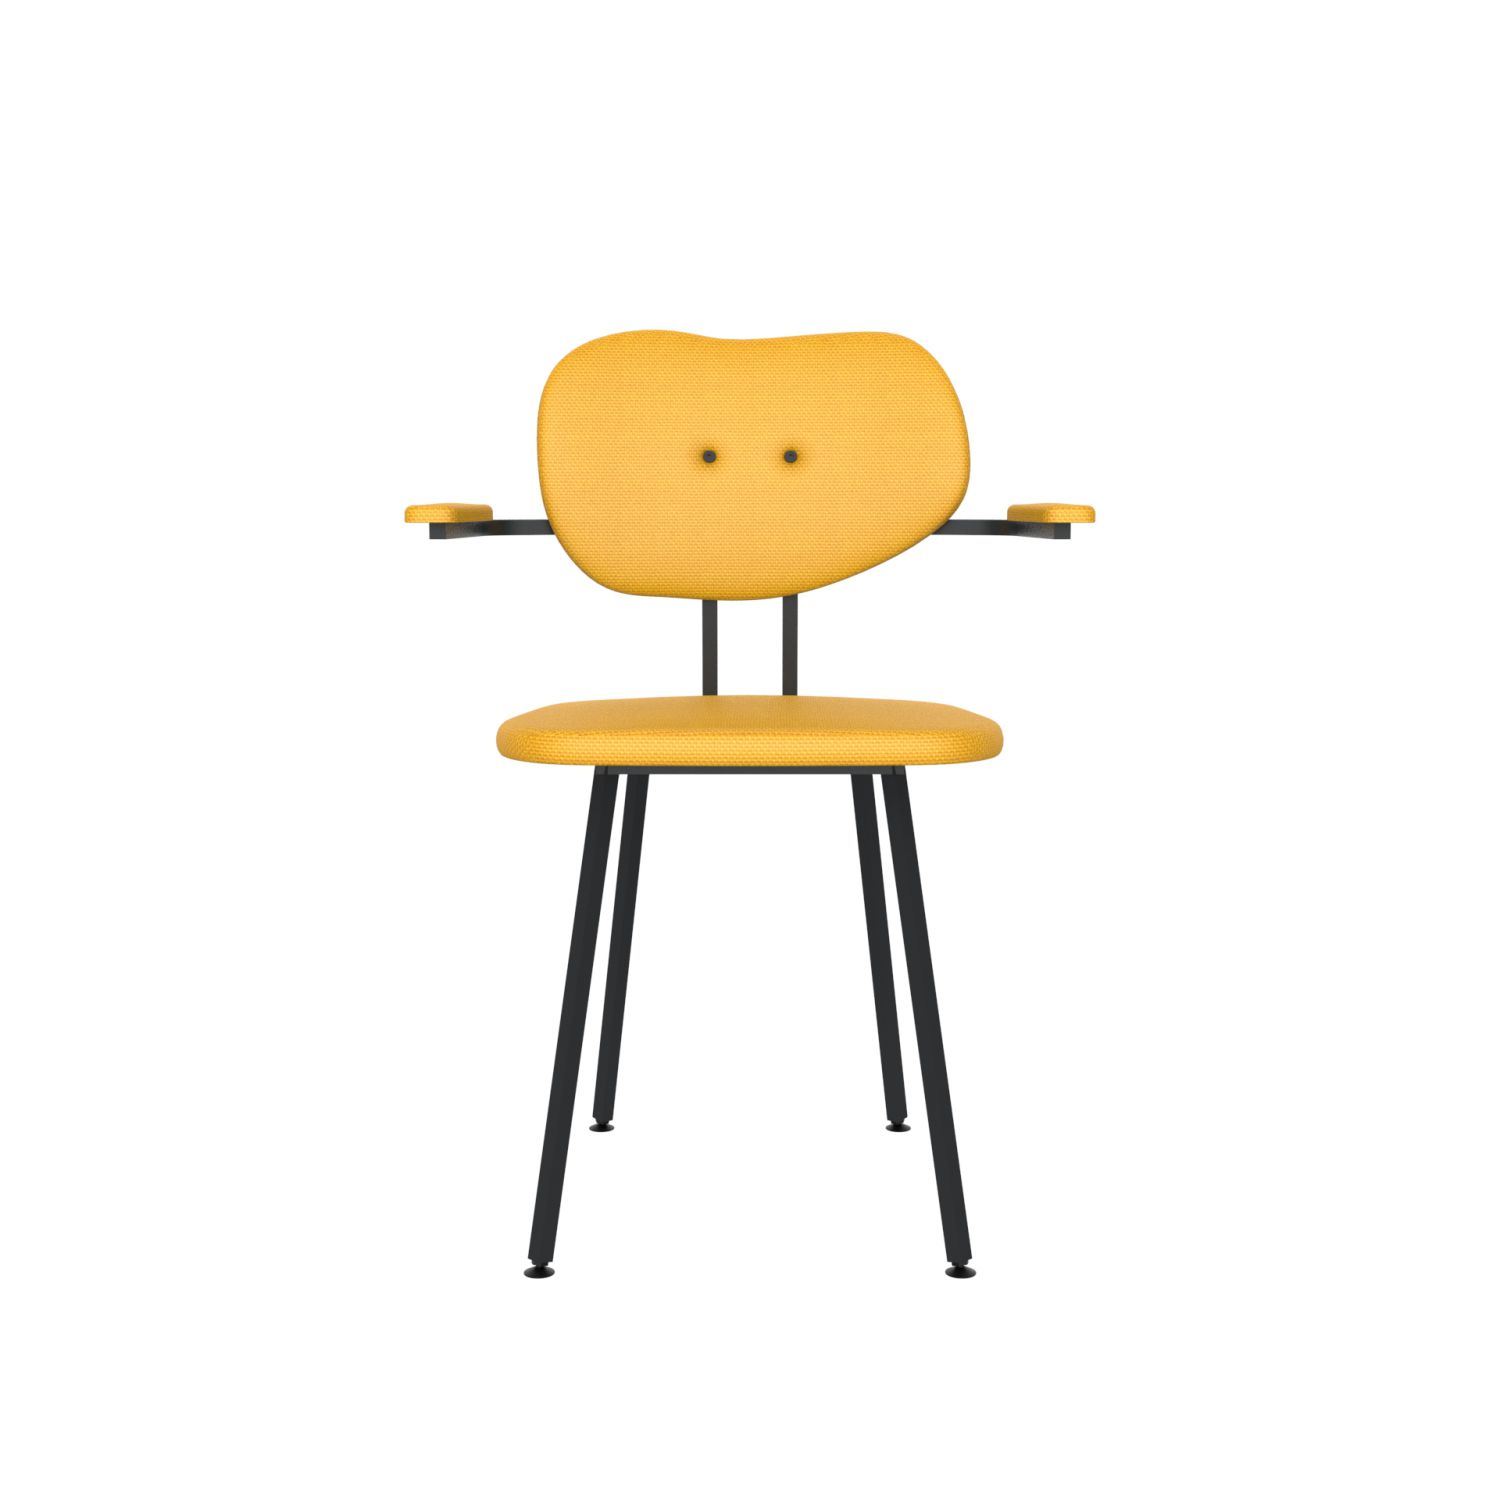 lensvelt maarten baas chair 102 not stackable with armrests backrest b lemon yellow 051 black ral9005 hard leg ends